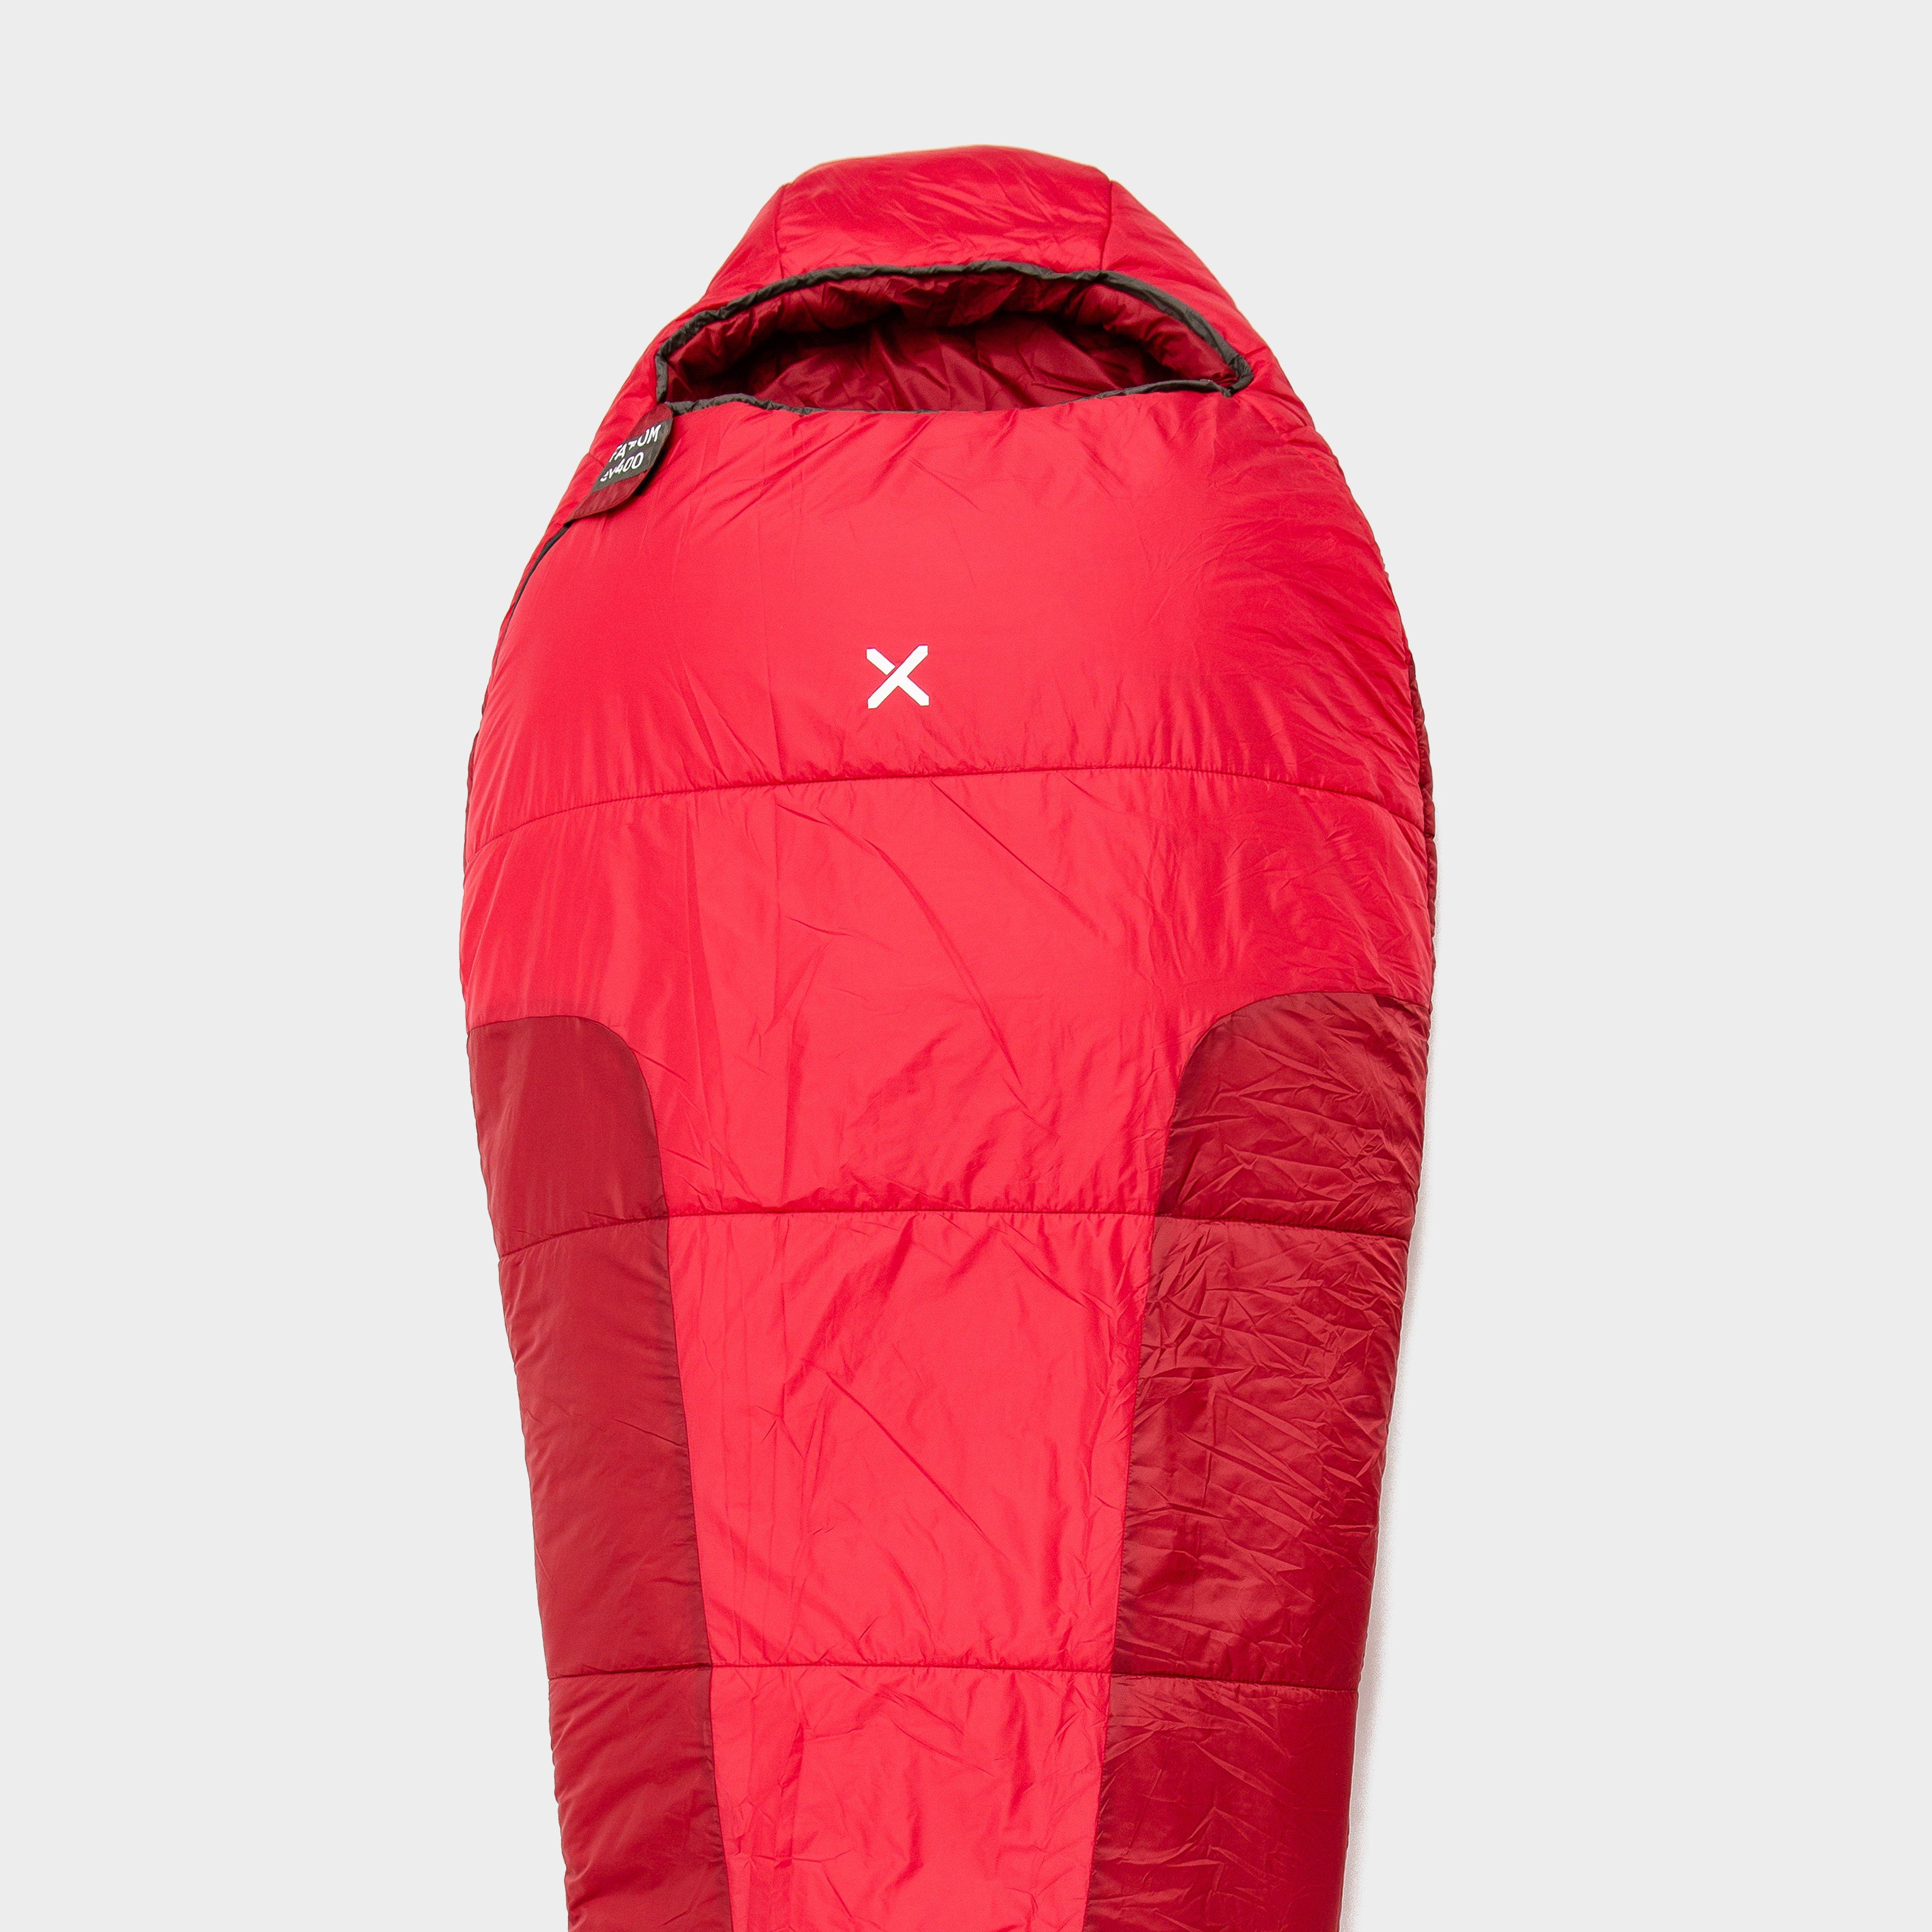 OEX Oex Fathom Ev 400 Sleeping Bag - Red, Red